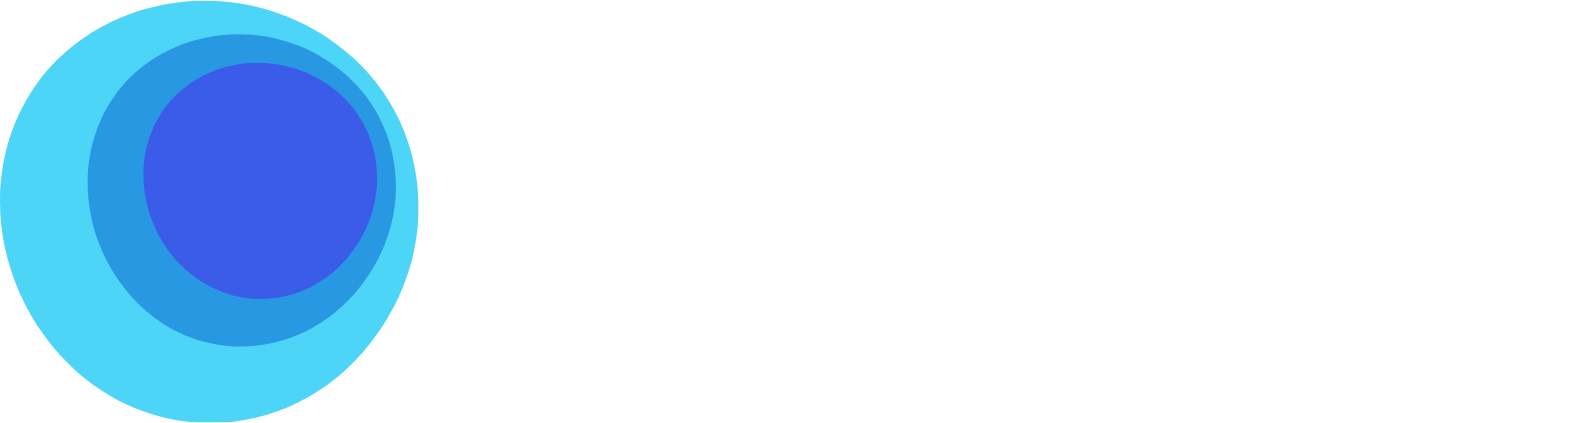 LabCorp logo large for dark backgrounds (transparent PNG)